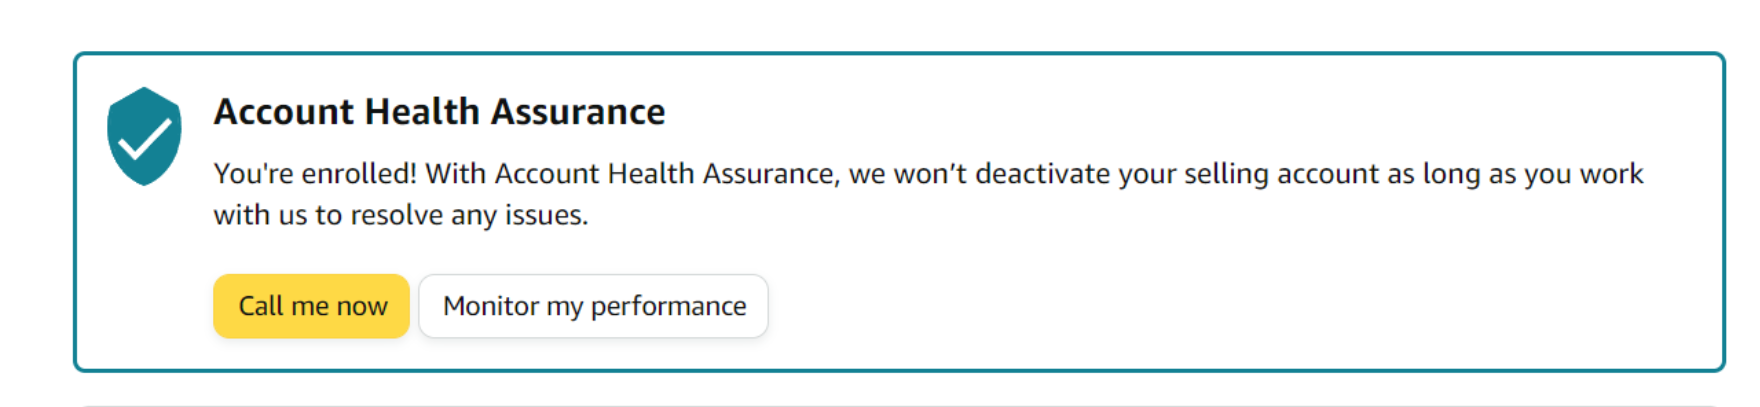 Amazon Account Health Assurance